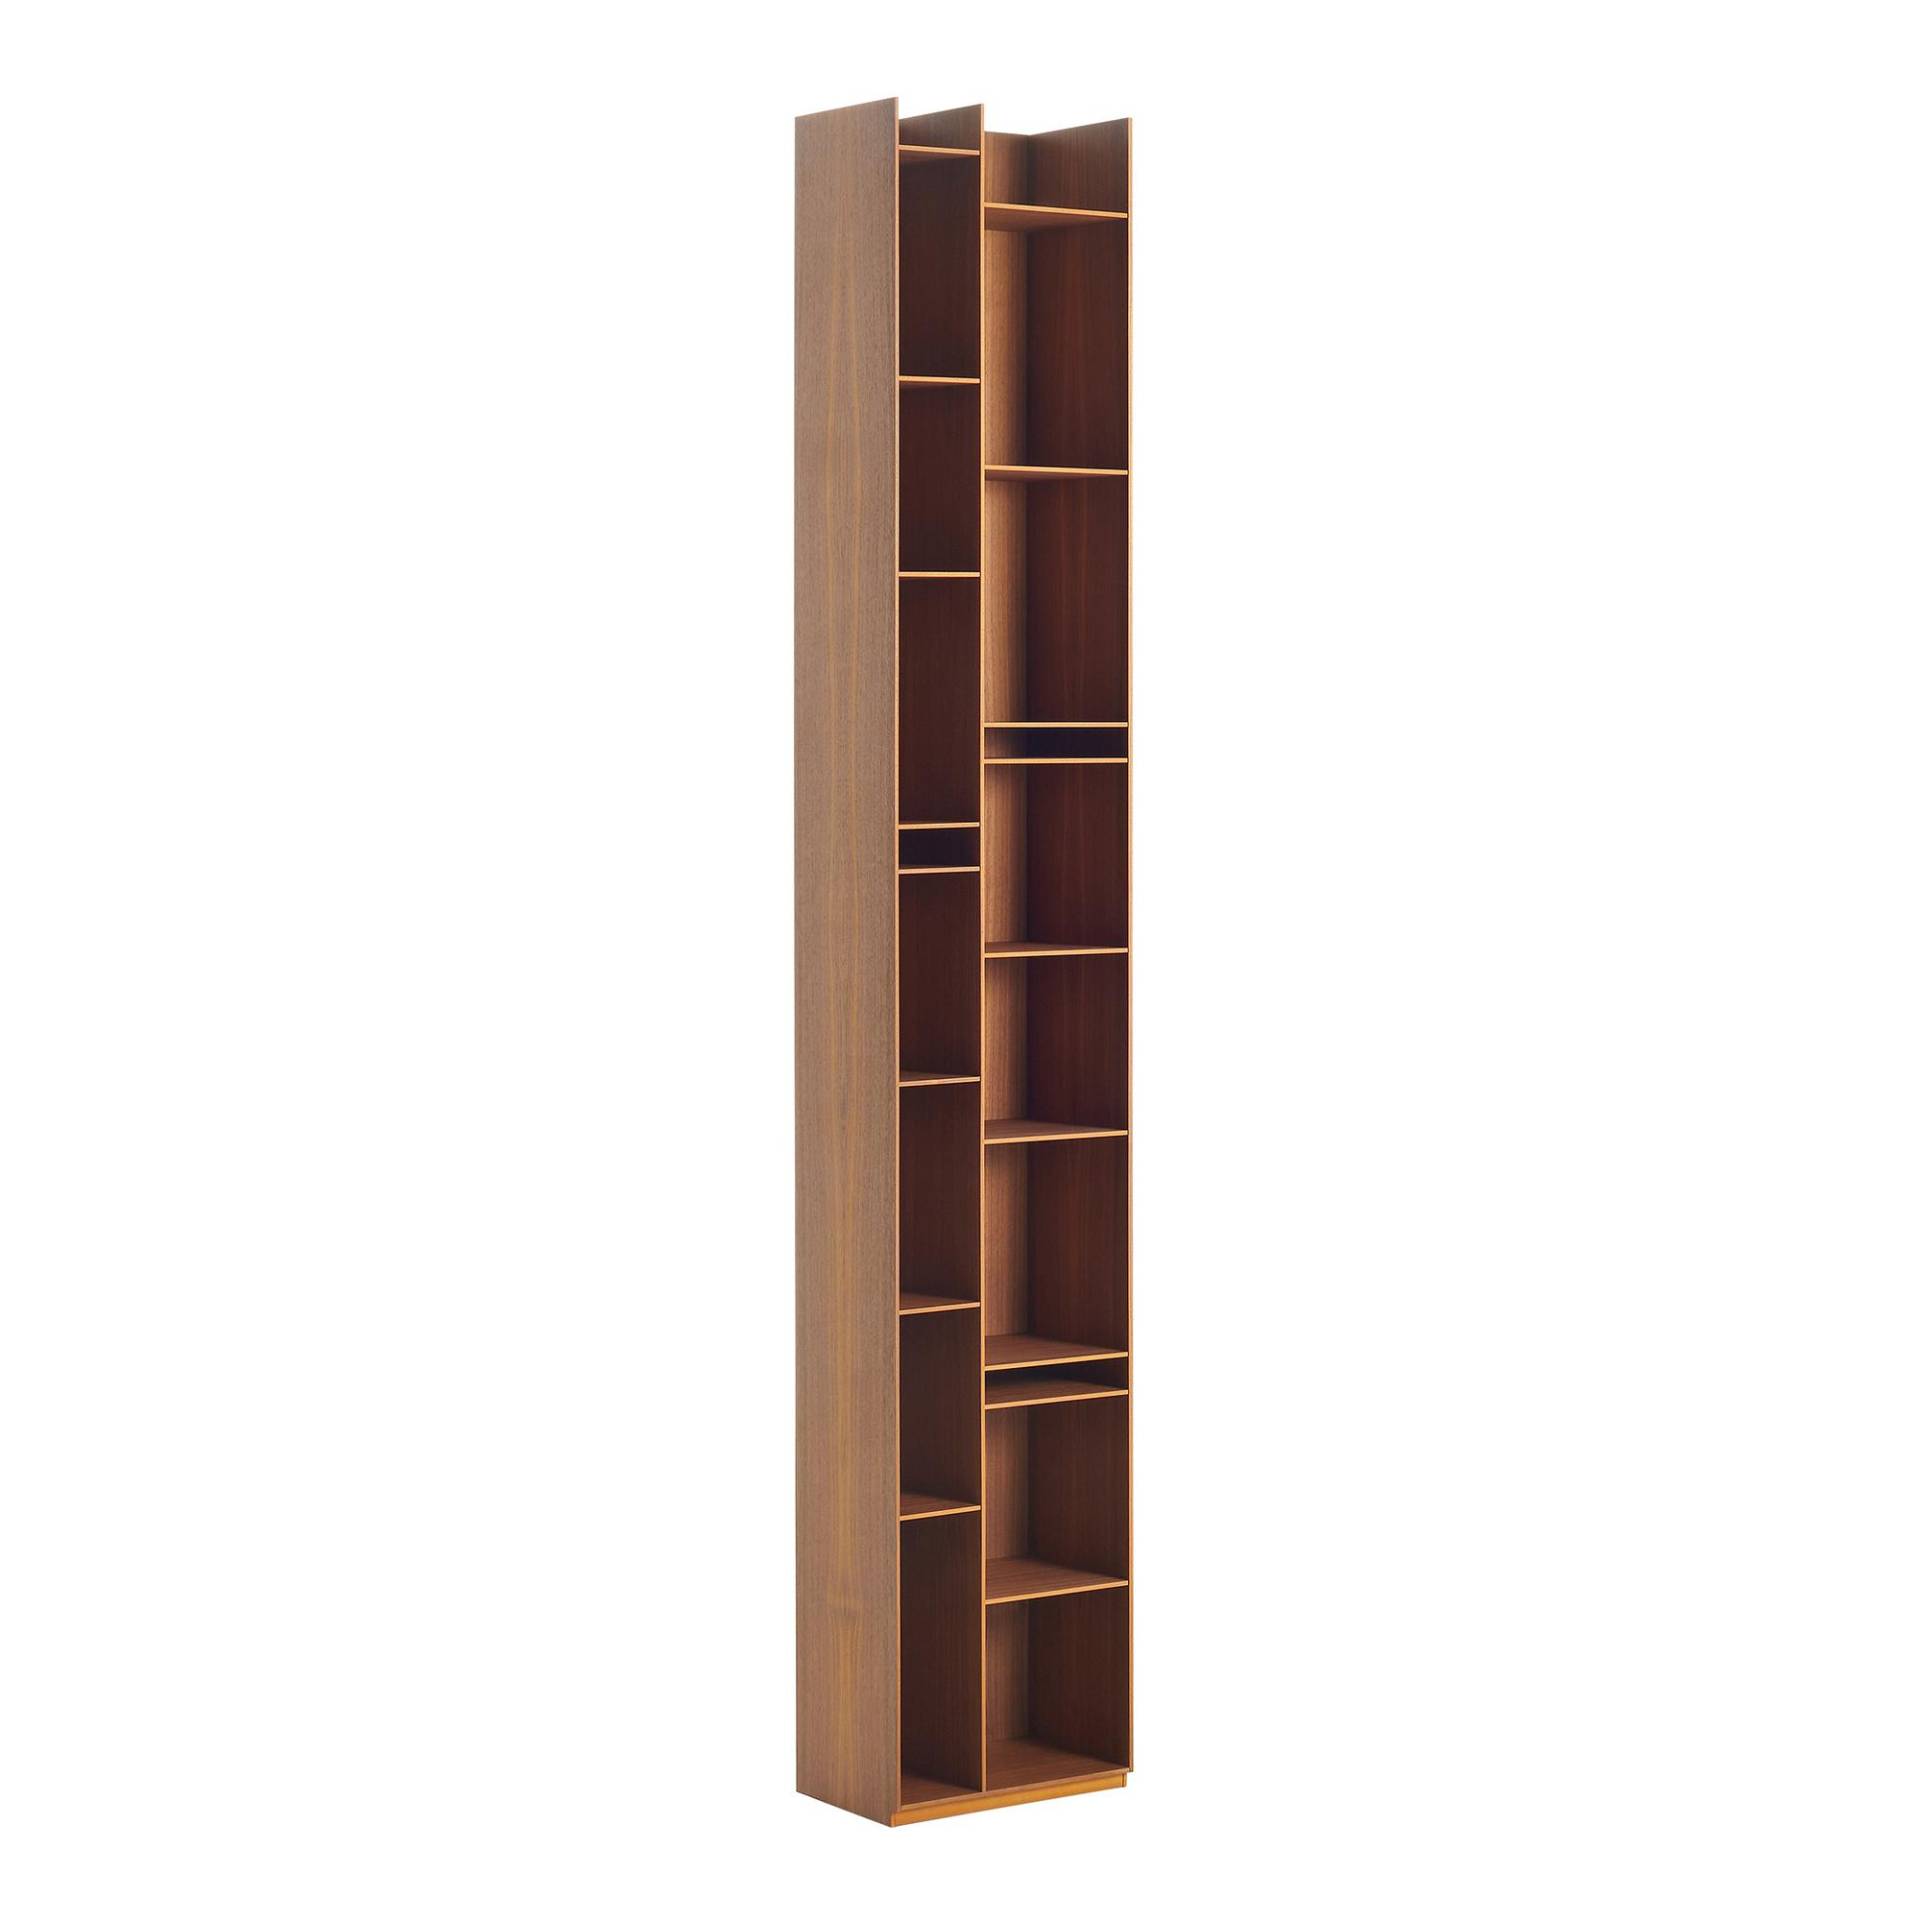 MDF Italia - Random Wood 2C Bücherregal - Canaletto Walnuss/Paneele 0,6cm dick/BxTxH 35,8x25x217cm/Rückwand 1cm dick/Füße verstellbar bis 1,5cm von MDF Italia